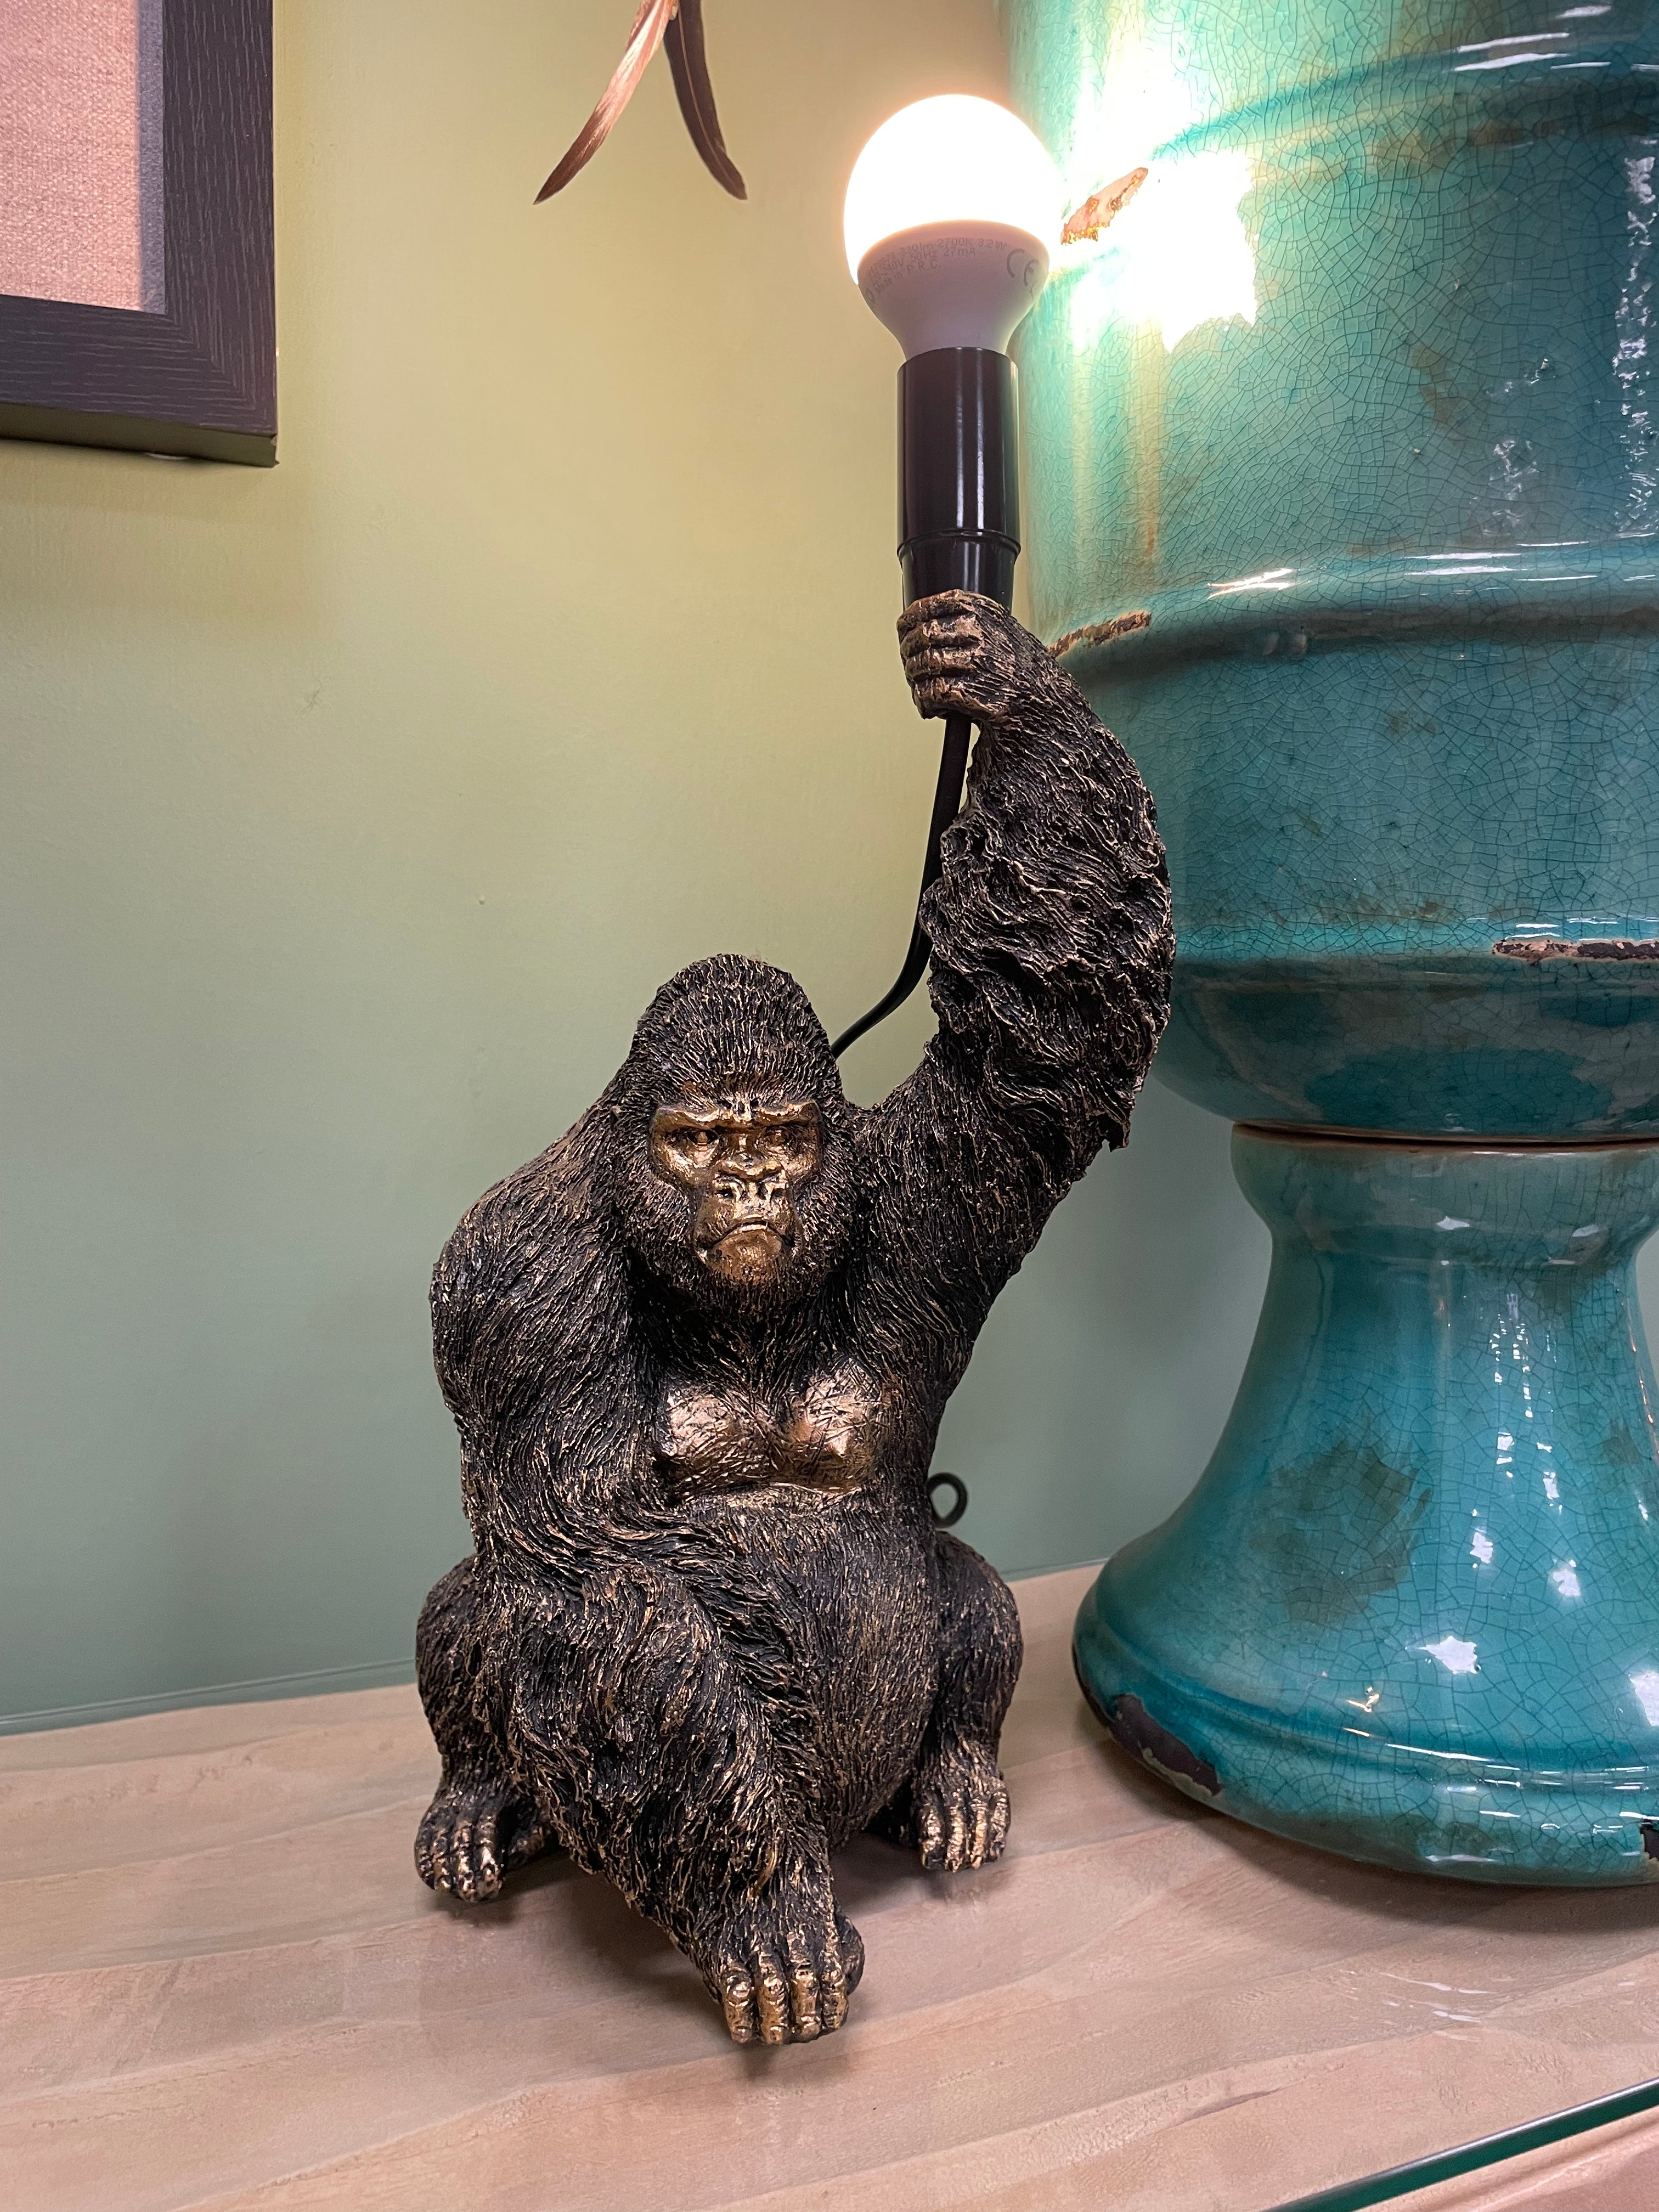 Gorilla Holding a Bulb arm up